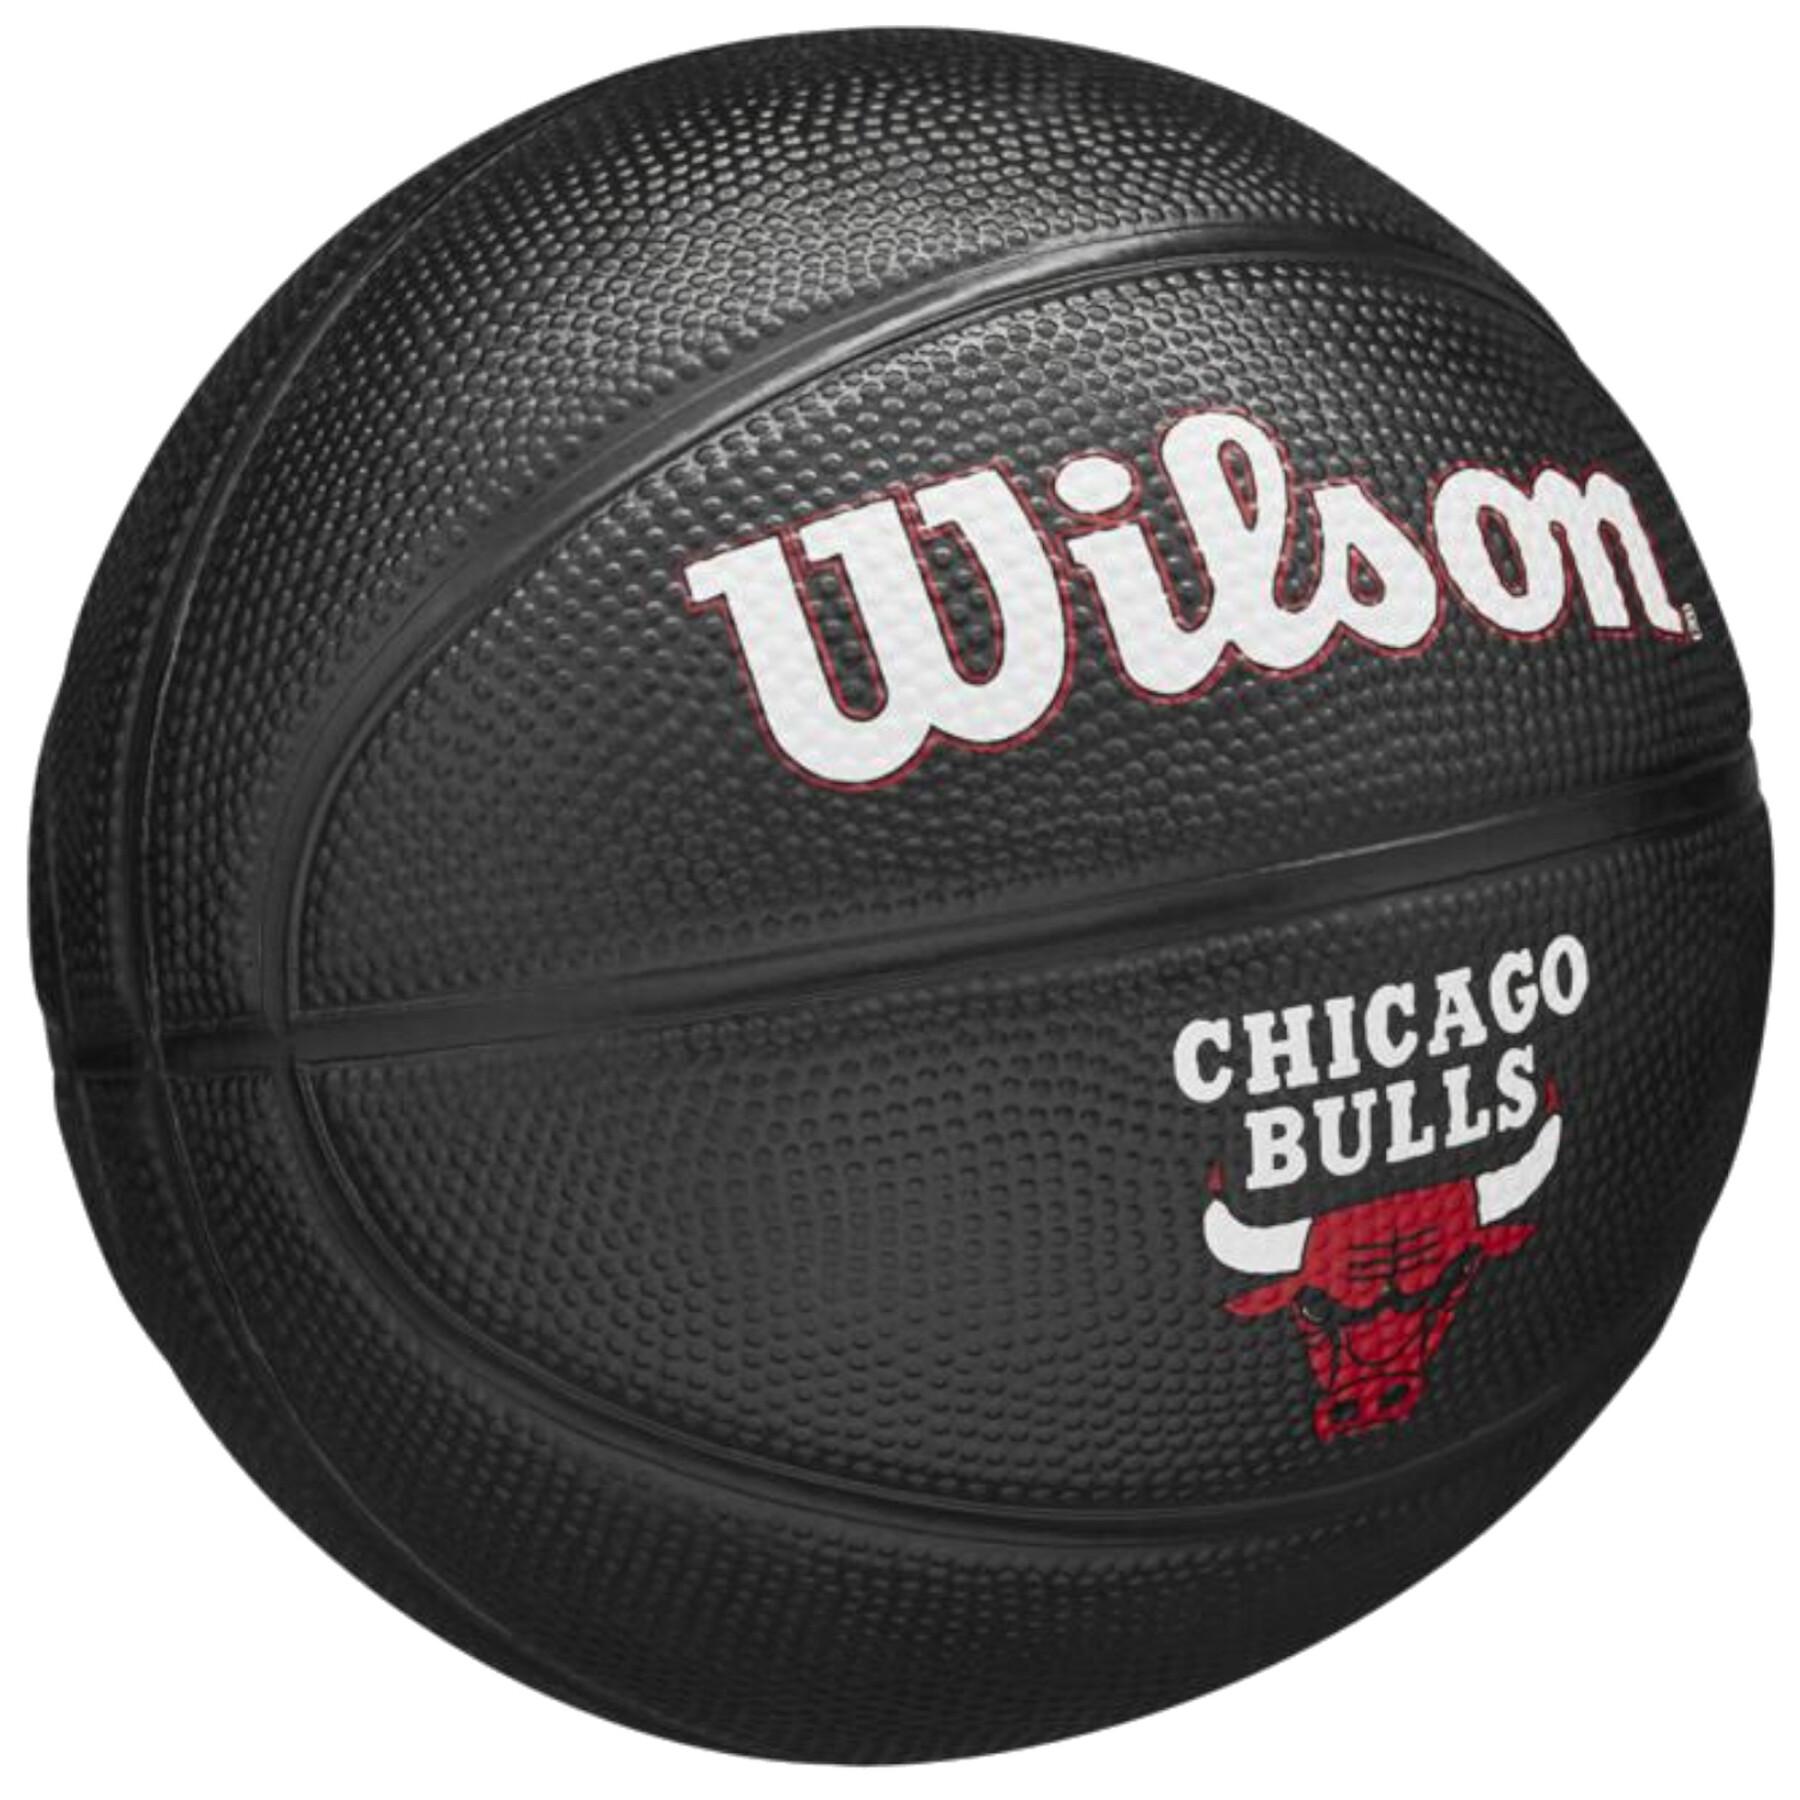 Mini balão nba Chicago Bulls